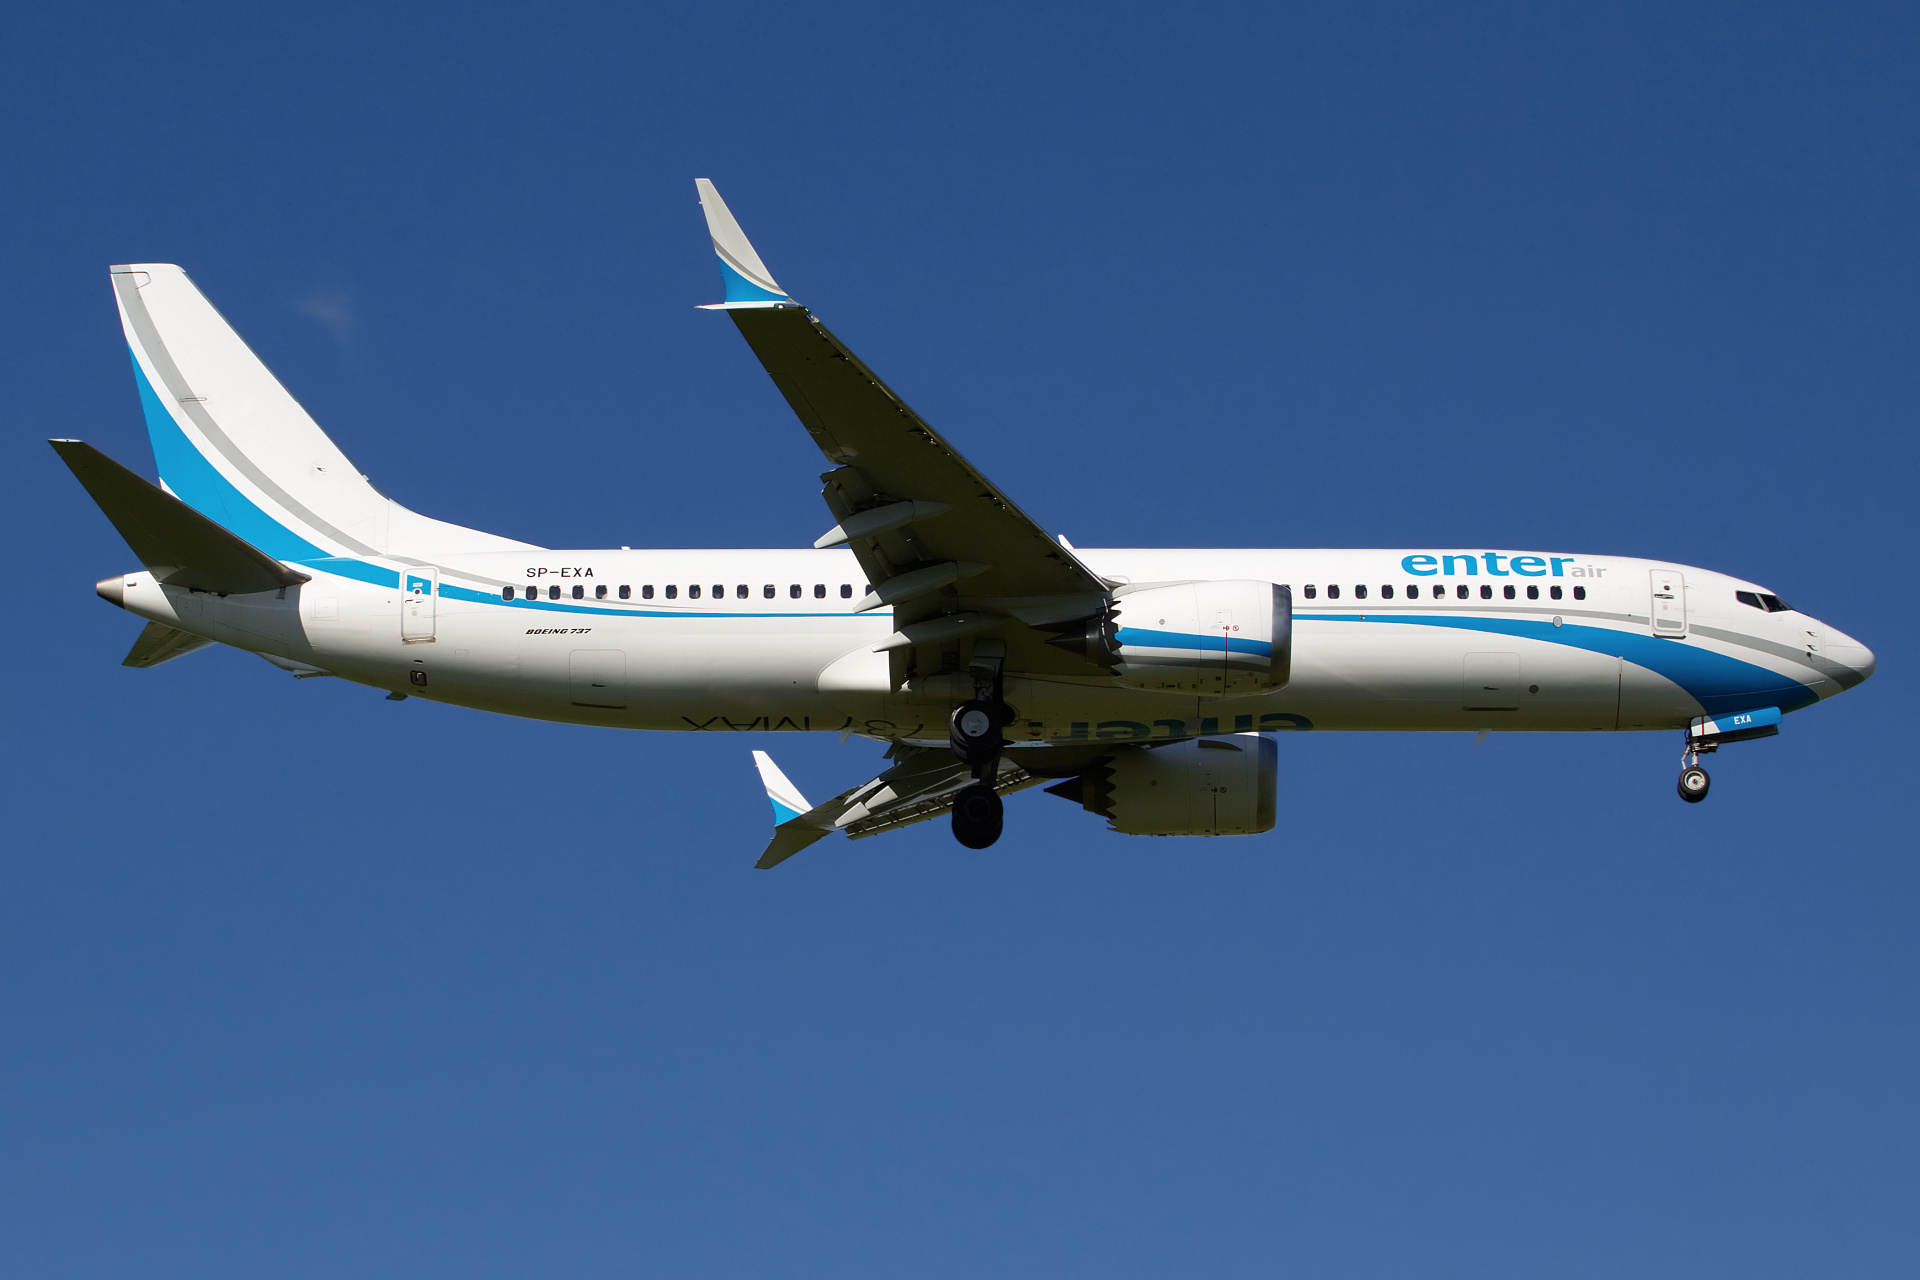 SP-EXA (Aircraft » EPWA Spotting » Boeing 737-8 MAX » Enter Air)